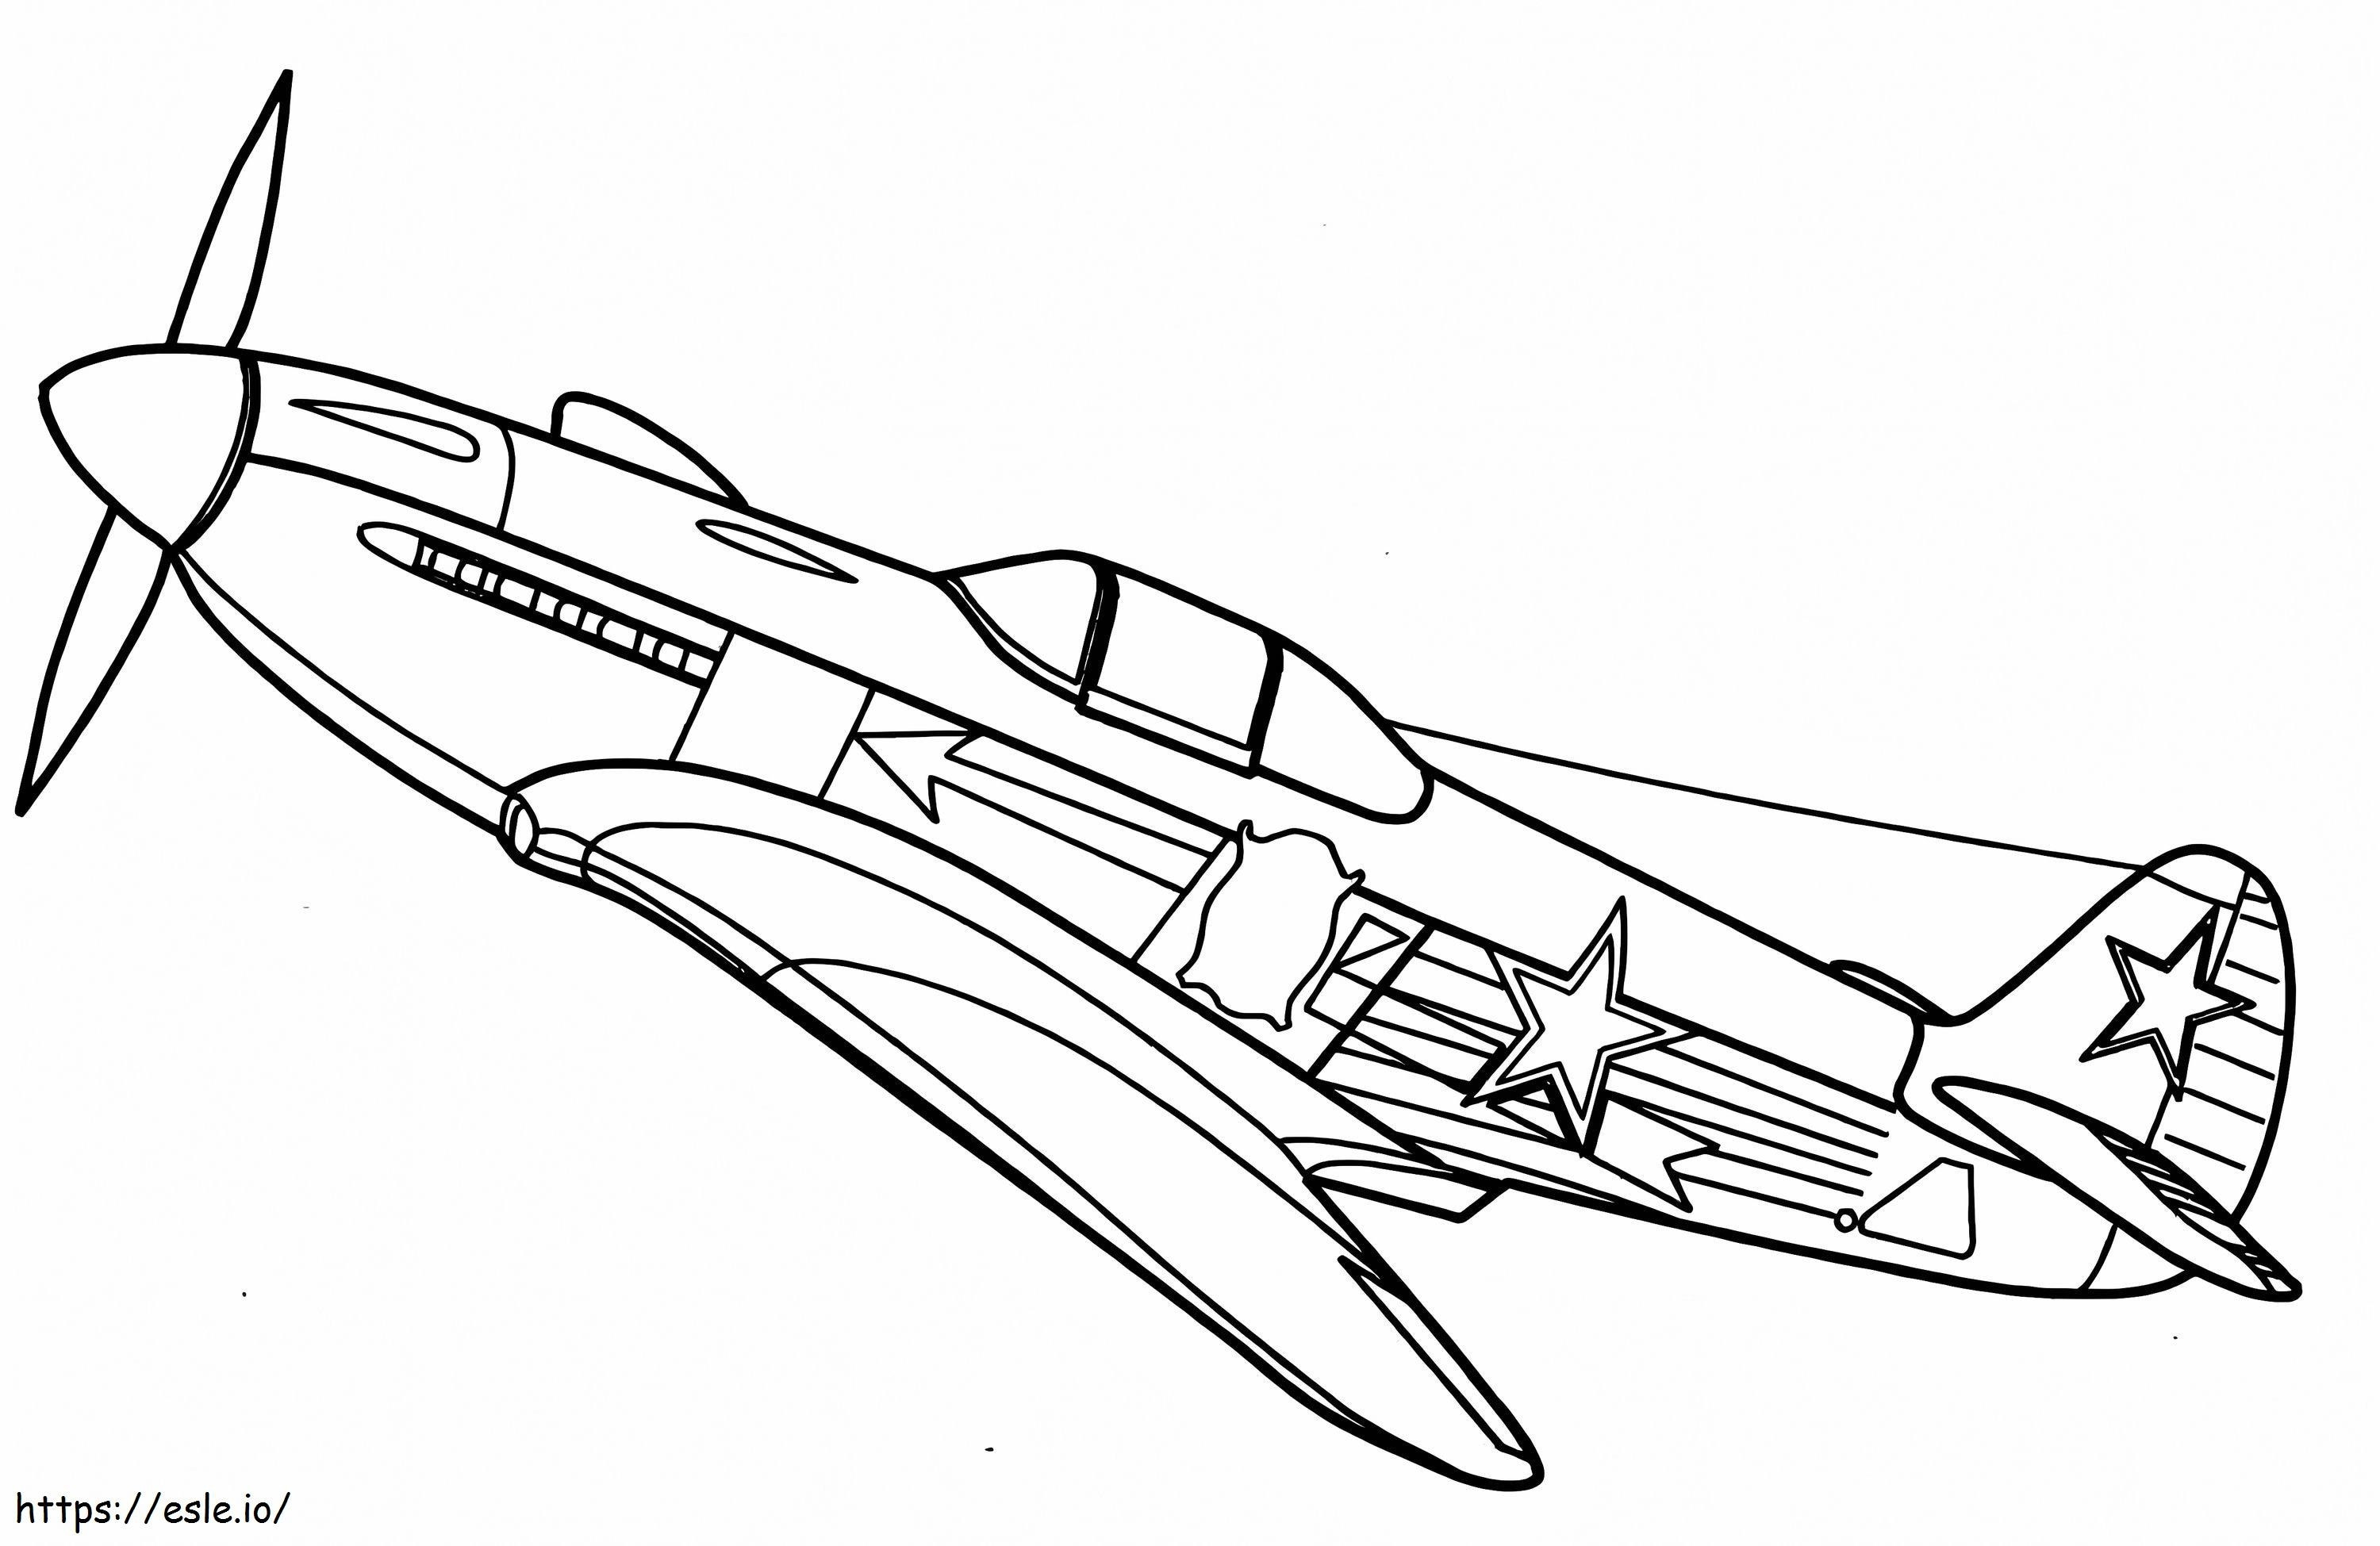 Coloriage Avion de chasse Yakovlev Yak 3 à imprimer dessin